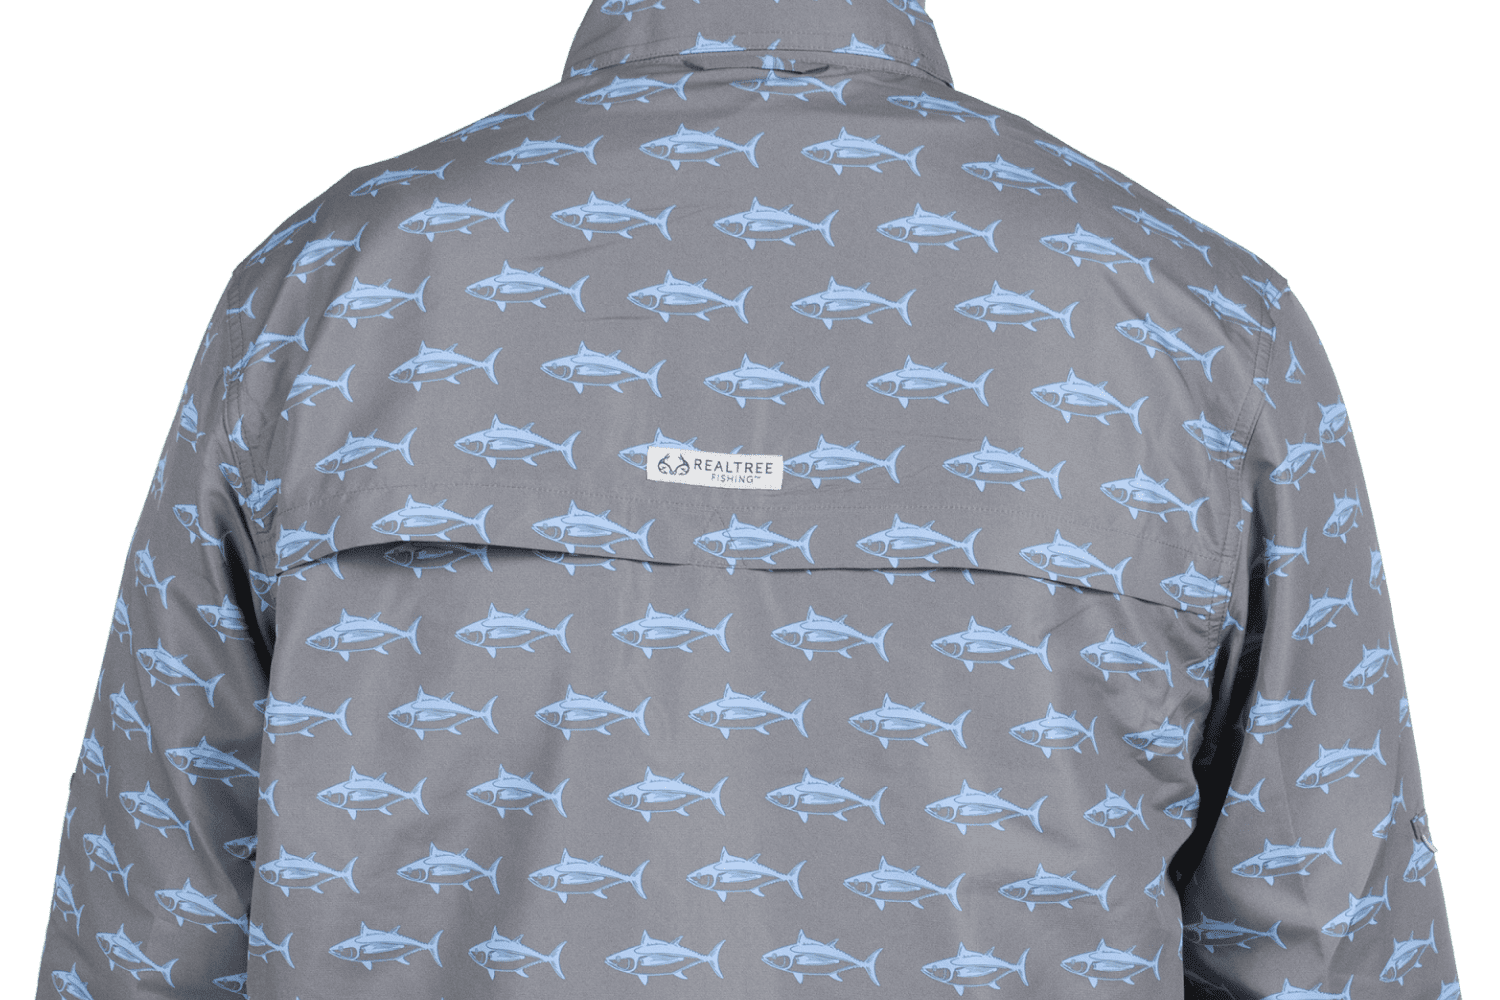 Realtree Men's Long Sleeve Premier Fishing Guide Shirt, Gargoyle Gray Tuna,  Size Medium 